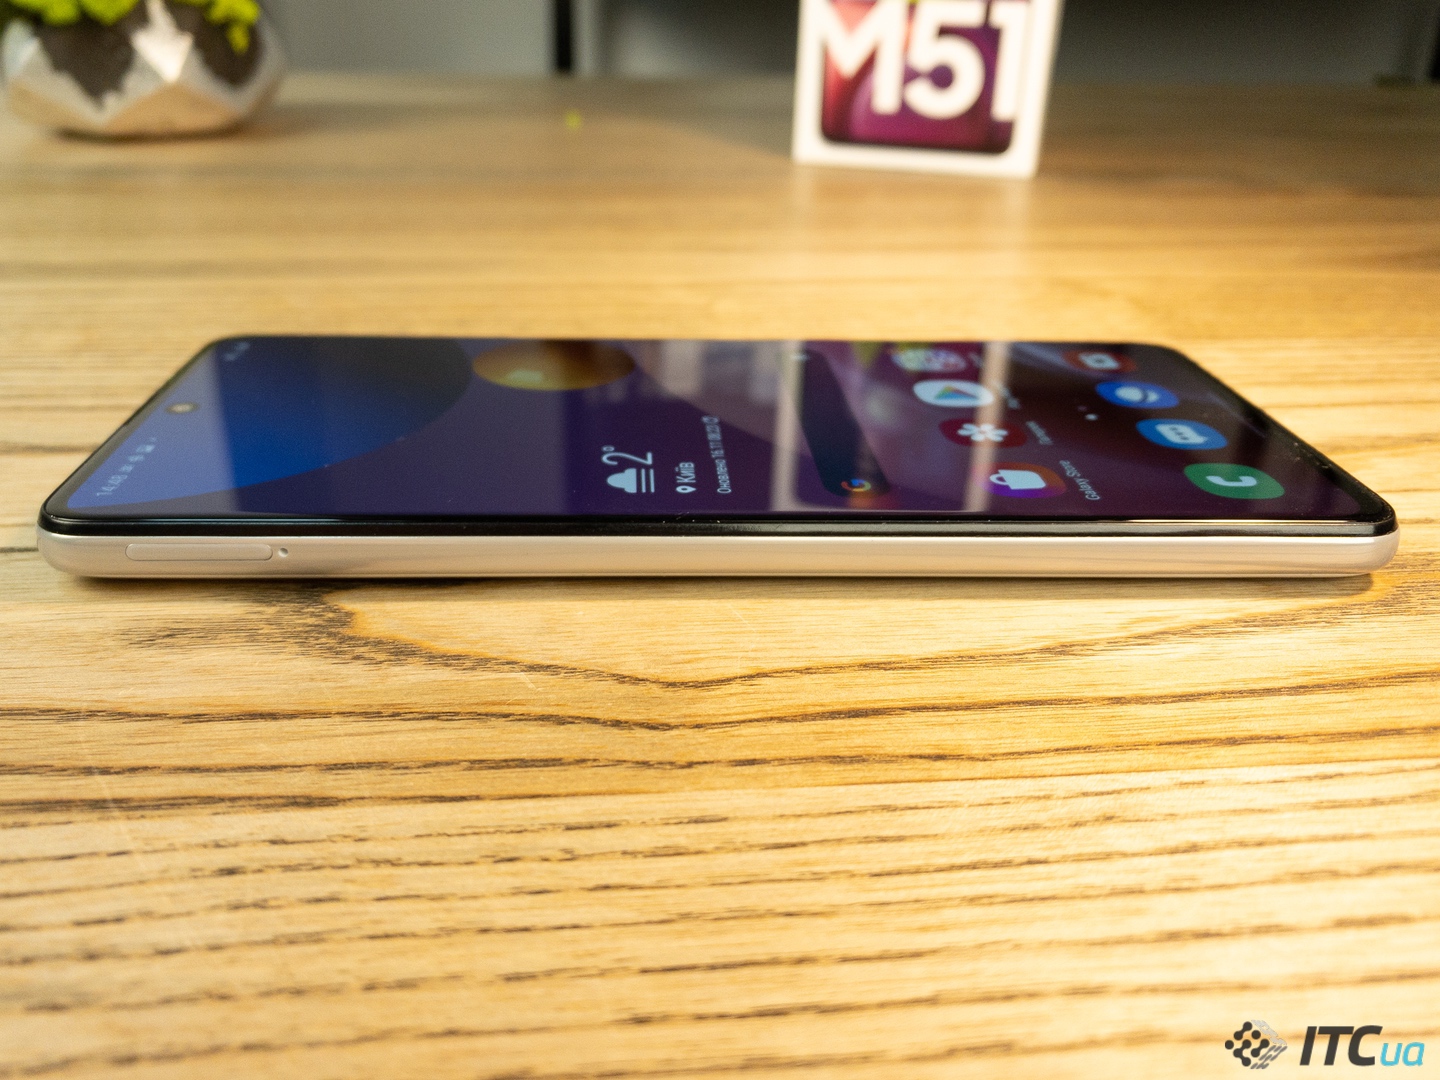 Samsung Galaxy M51 - обзор смартфона с аккумулятором 7000 мА•ч